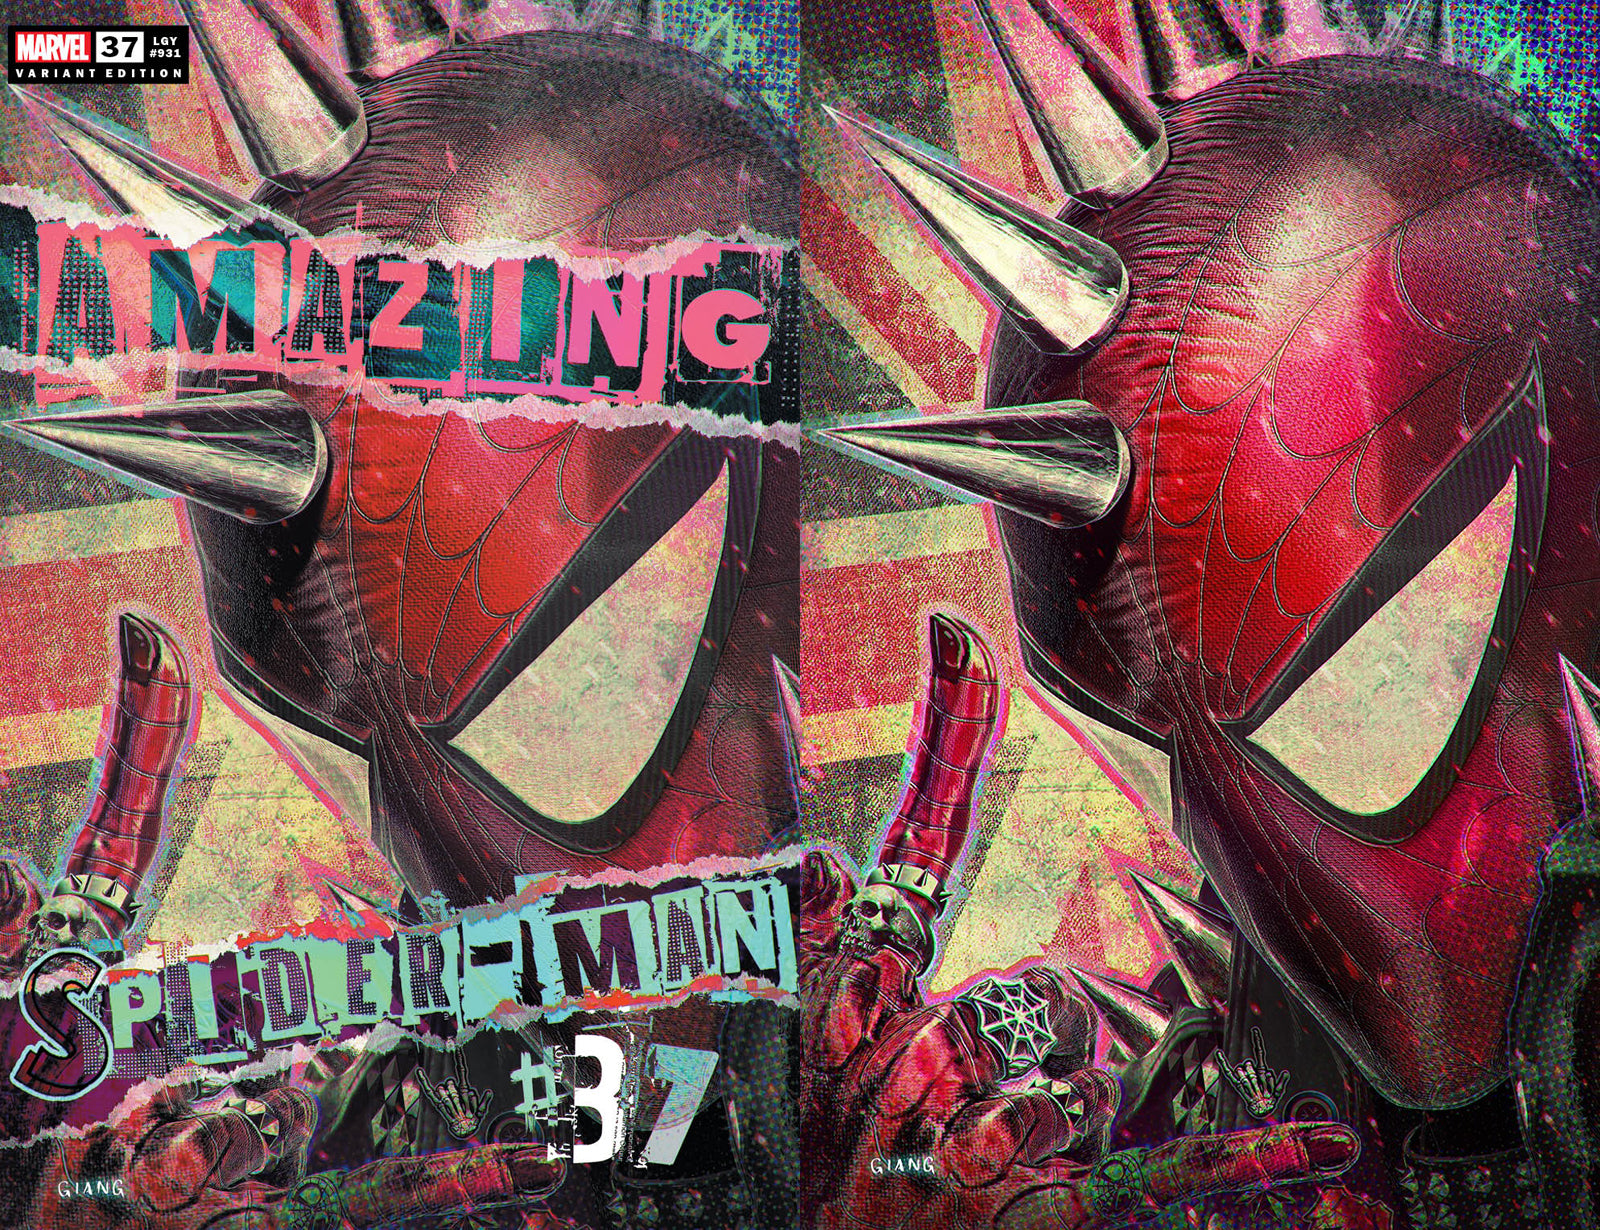 Spider-Punk (Variant Cover) (Marvel Comics)